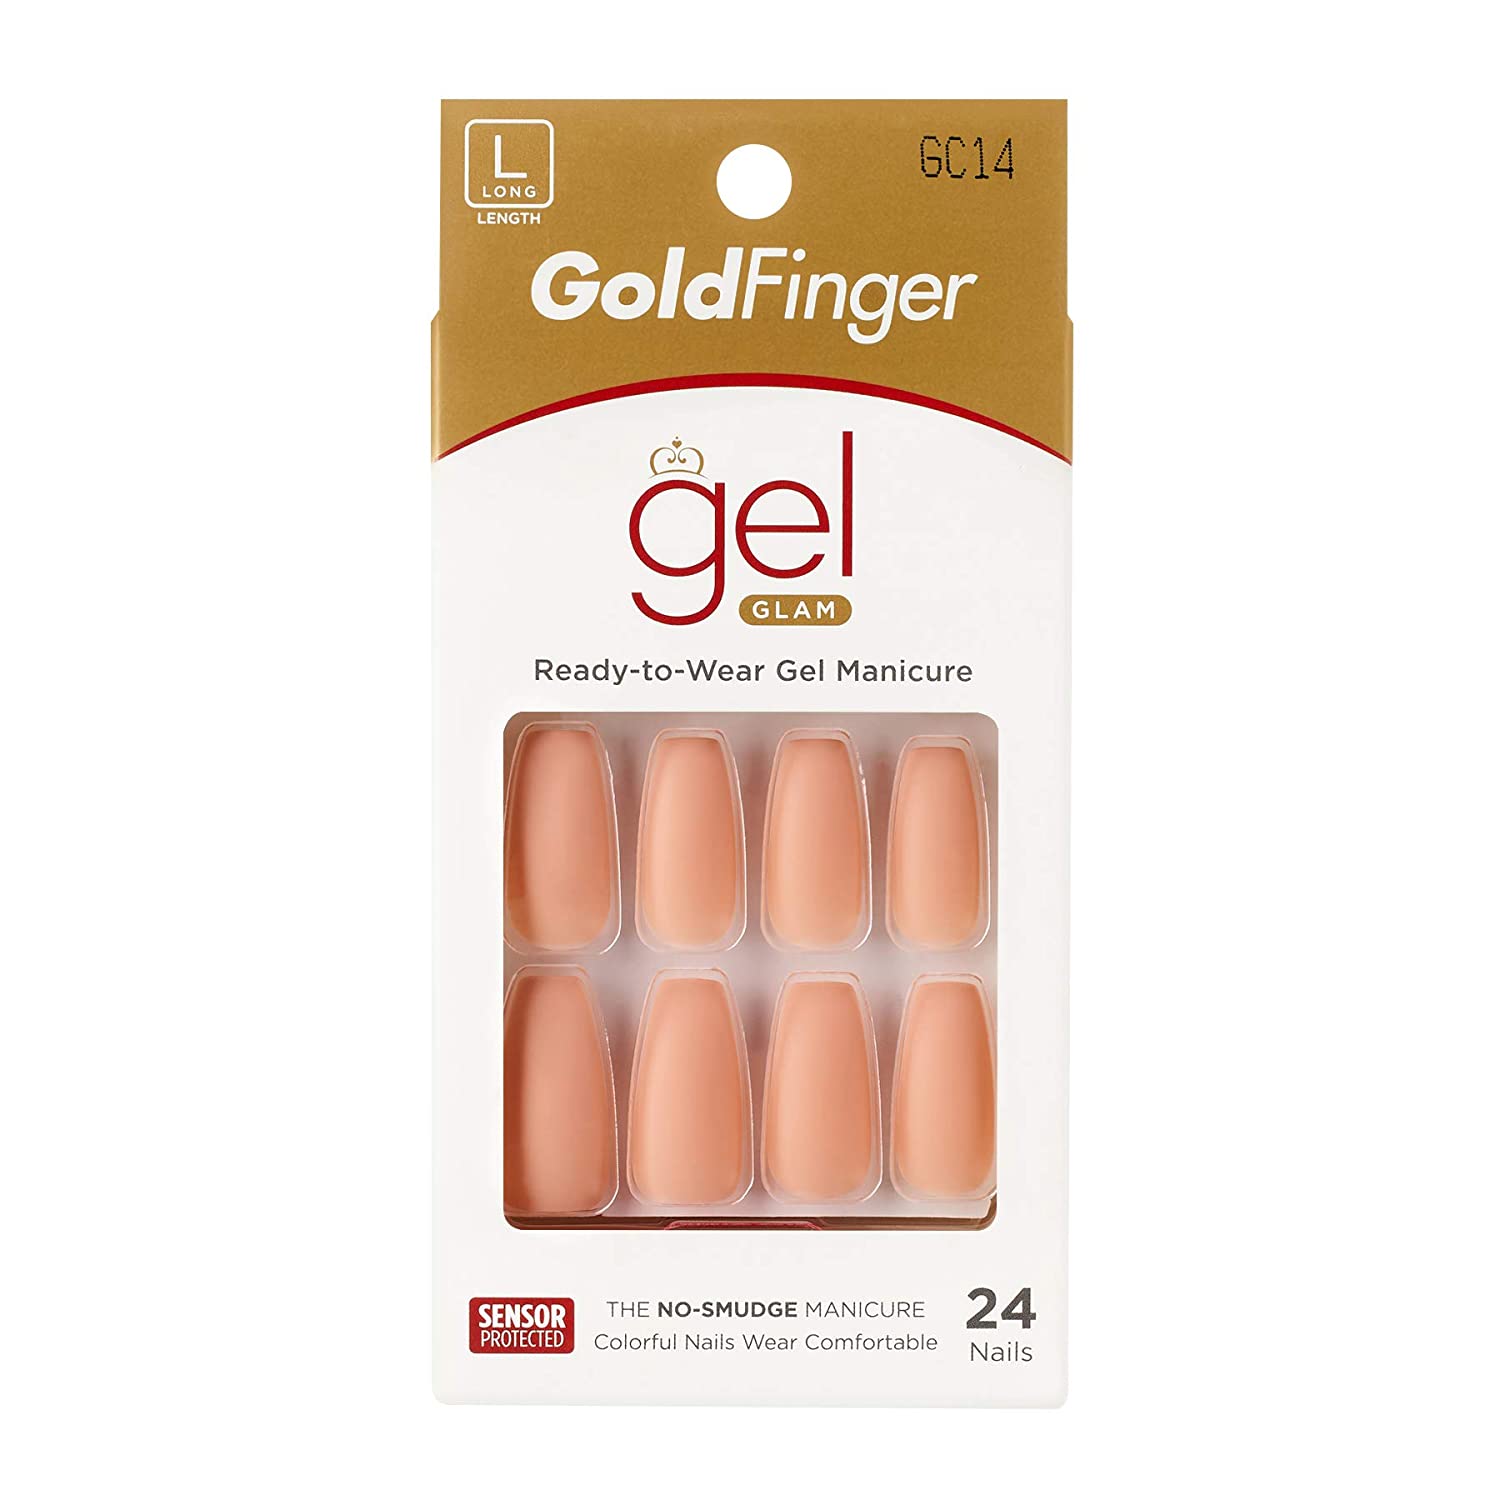 Kiss GoldFinger Gel Glam Ready-to-Wear Gel Manicure (GC14)